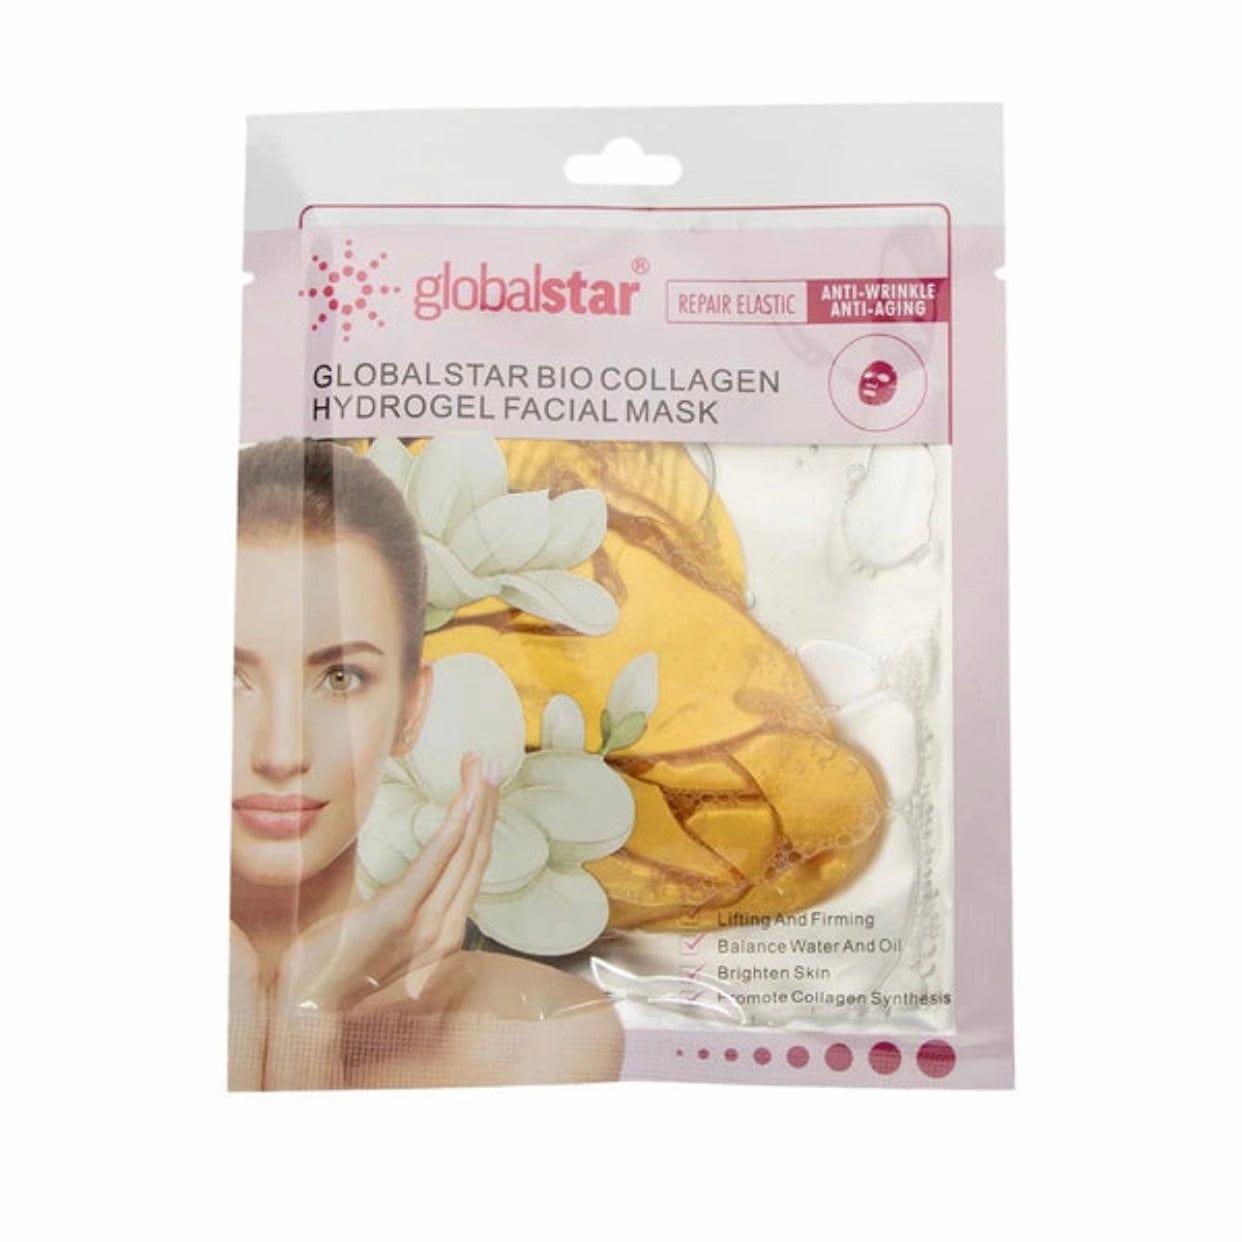 Globalstar Bio Collagen Hydrogel Facial Mask Gold 1pc